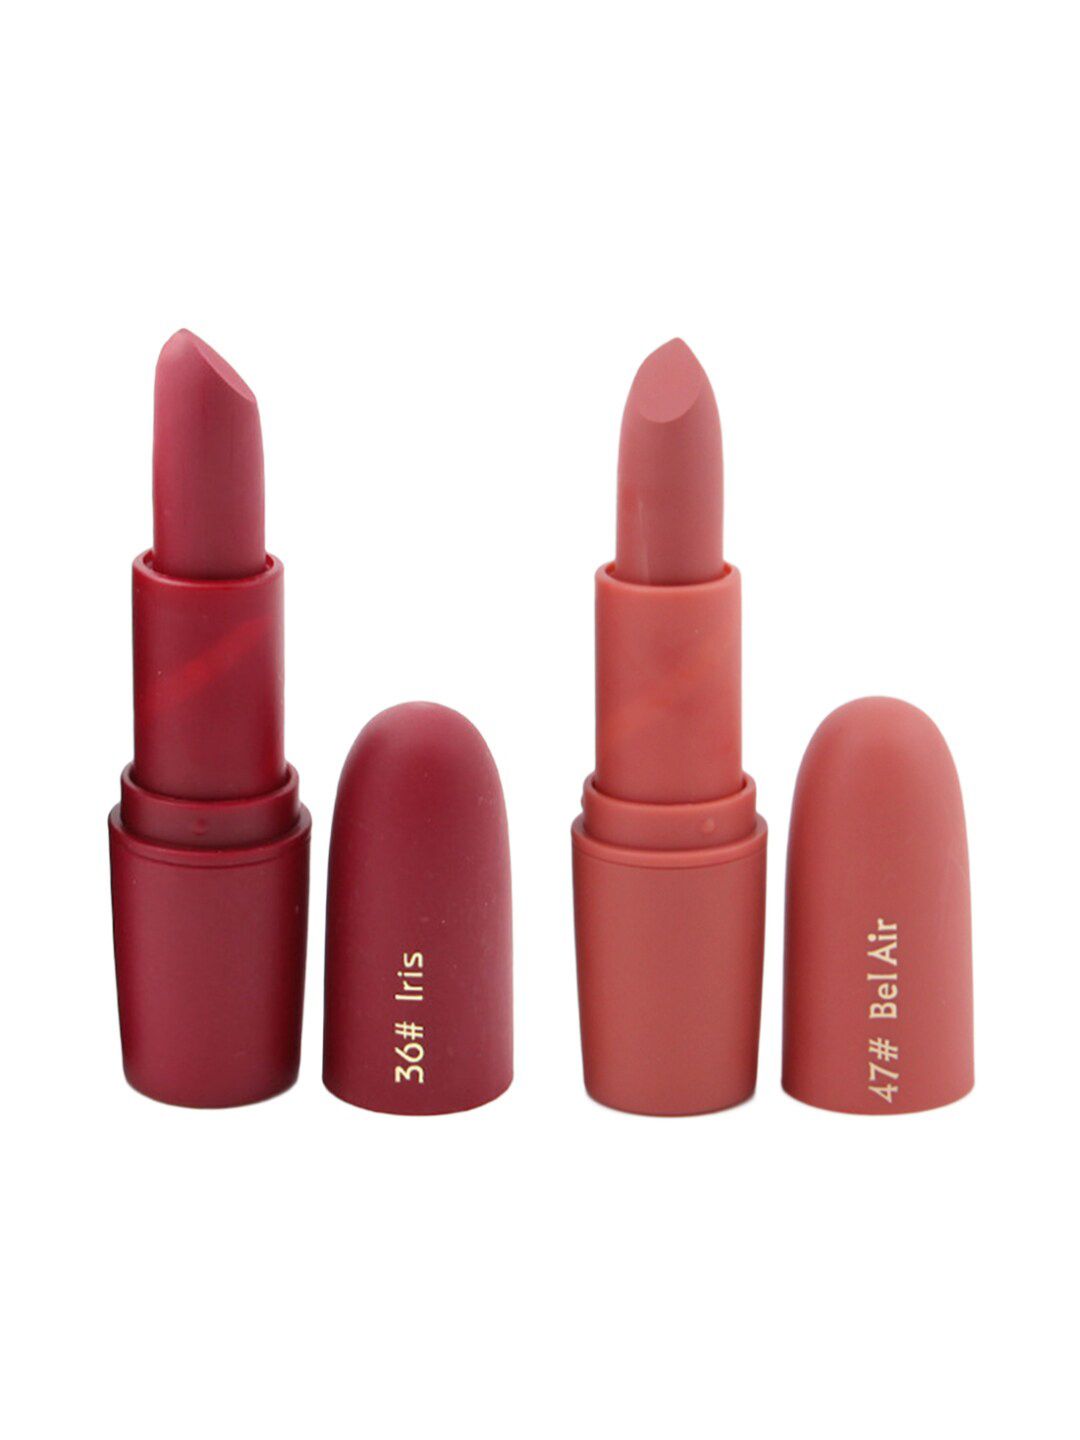 MISS ROSE Set of 2 Matte Creamy Bullet Lipsticks - 36 Iris & 47 Bel Air Price in India